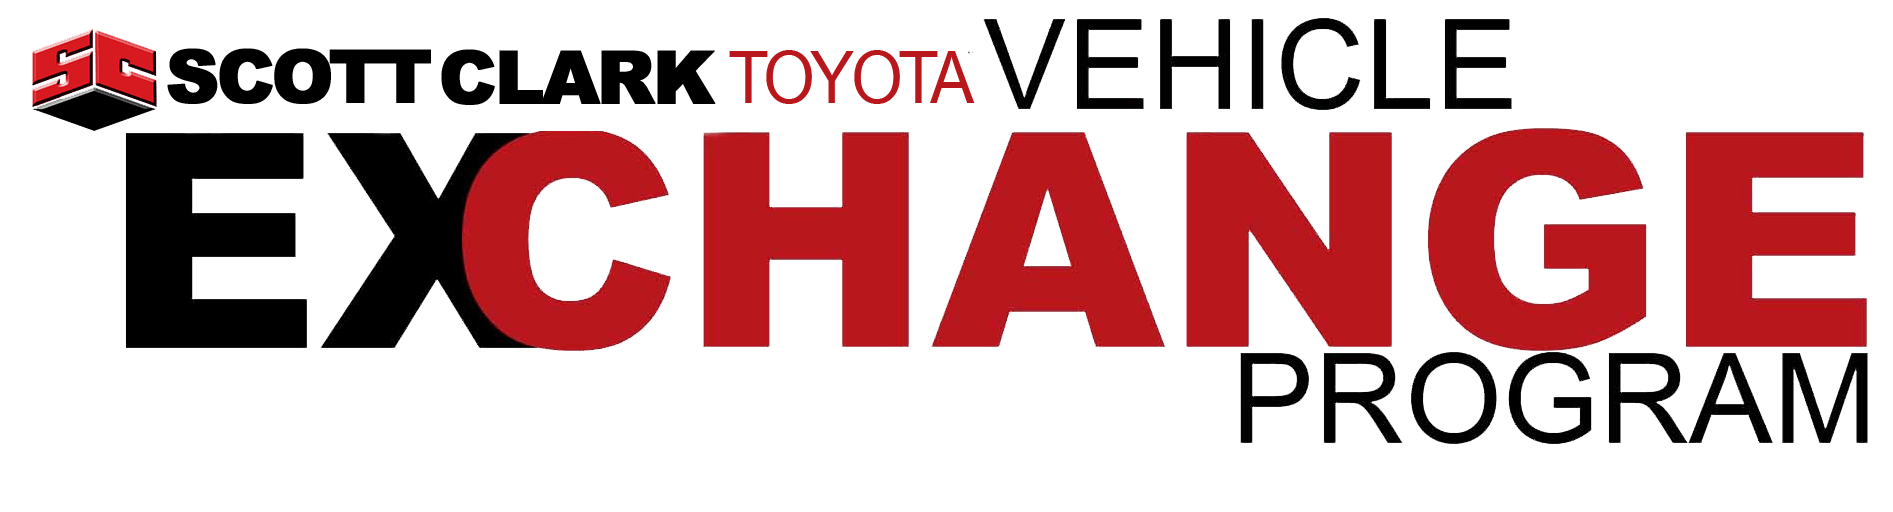 Scott Clark Toyota Vehicle Exchange Program Logo